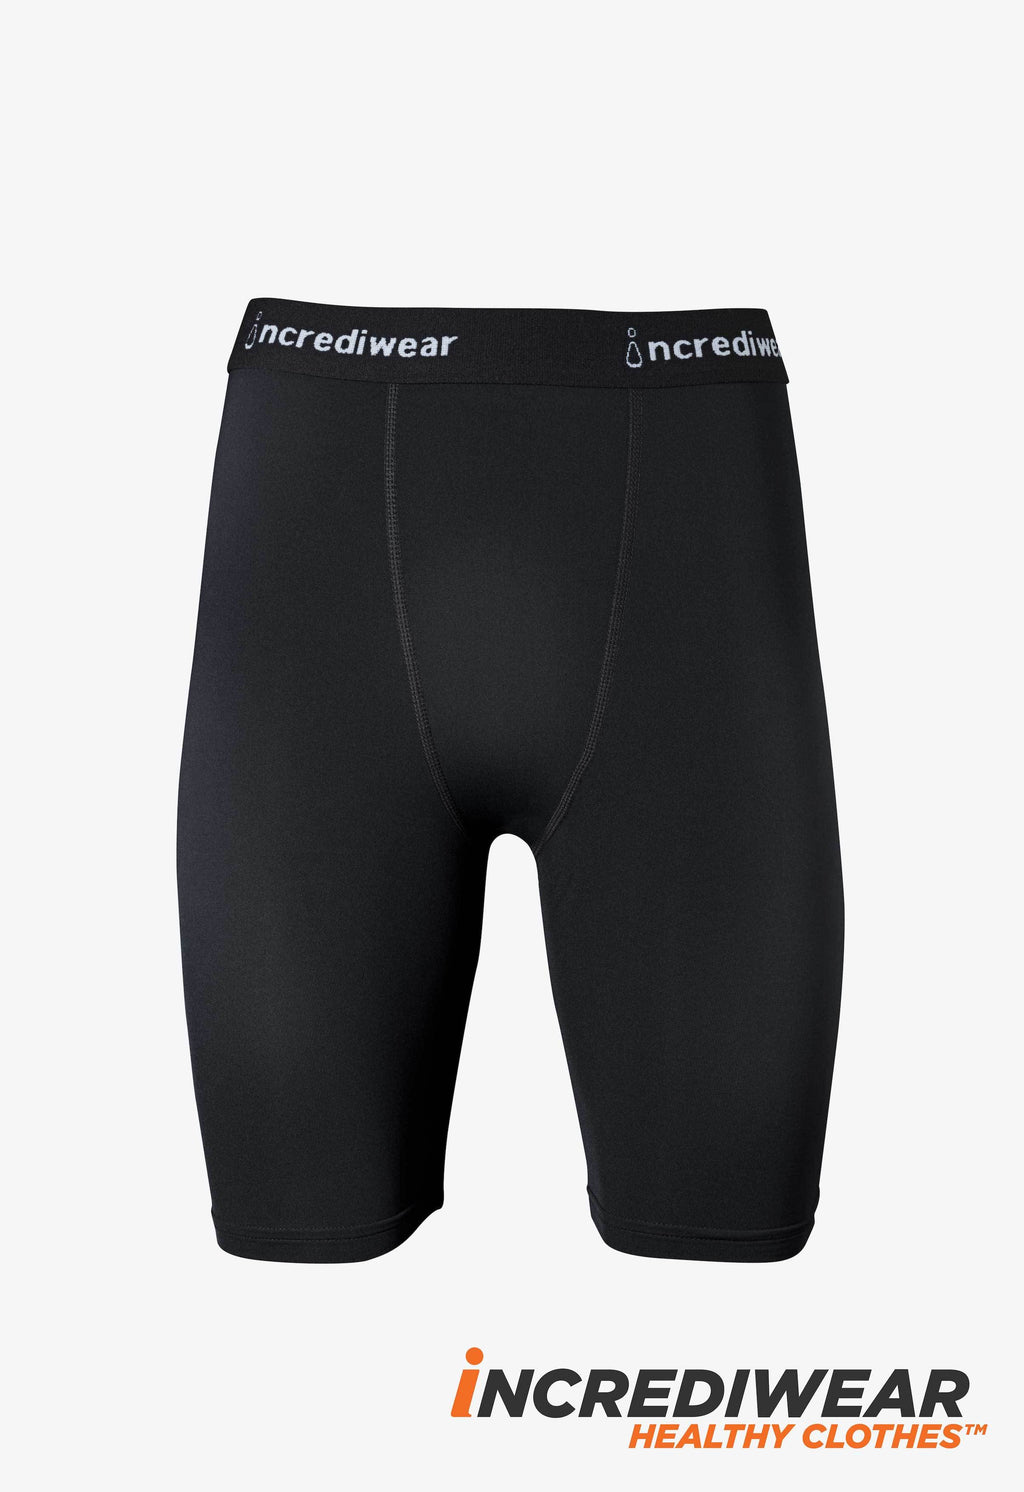 Men's Pro Compression Shorts - Iron Grey